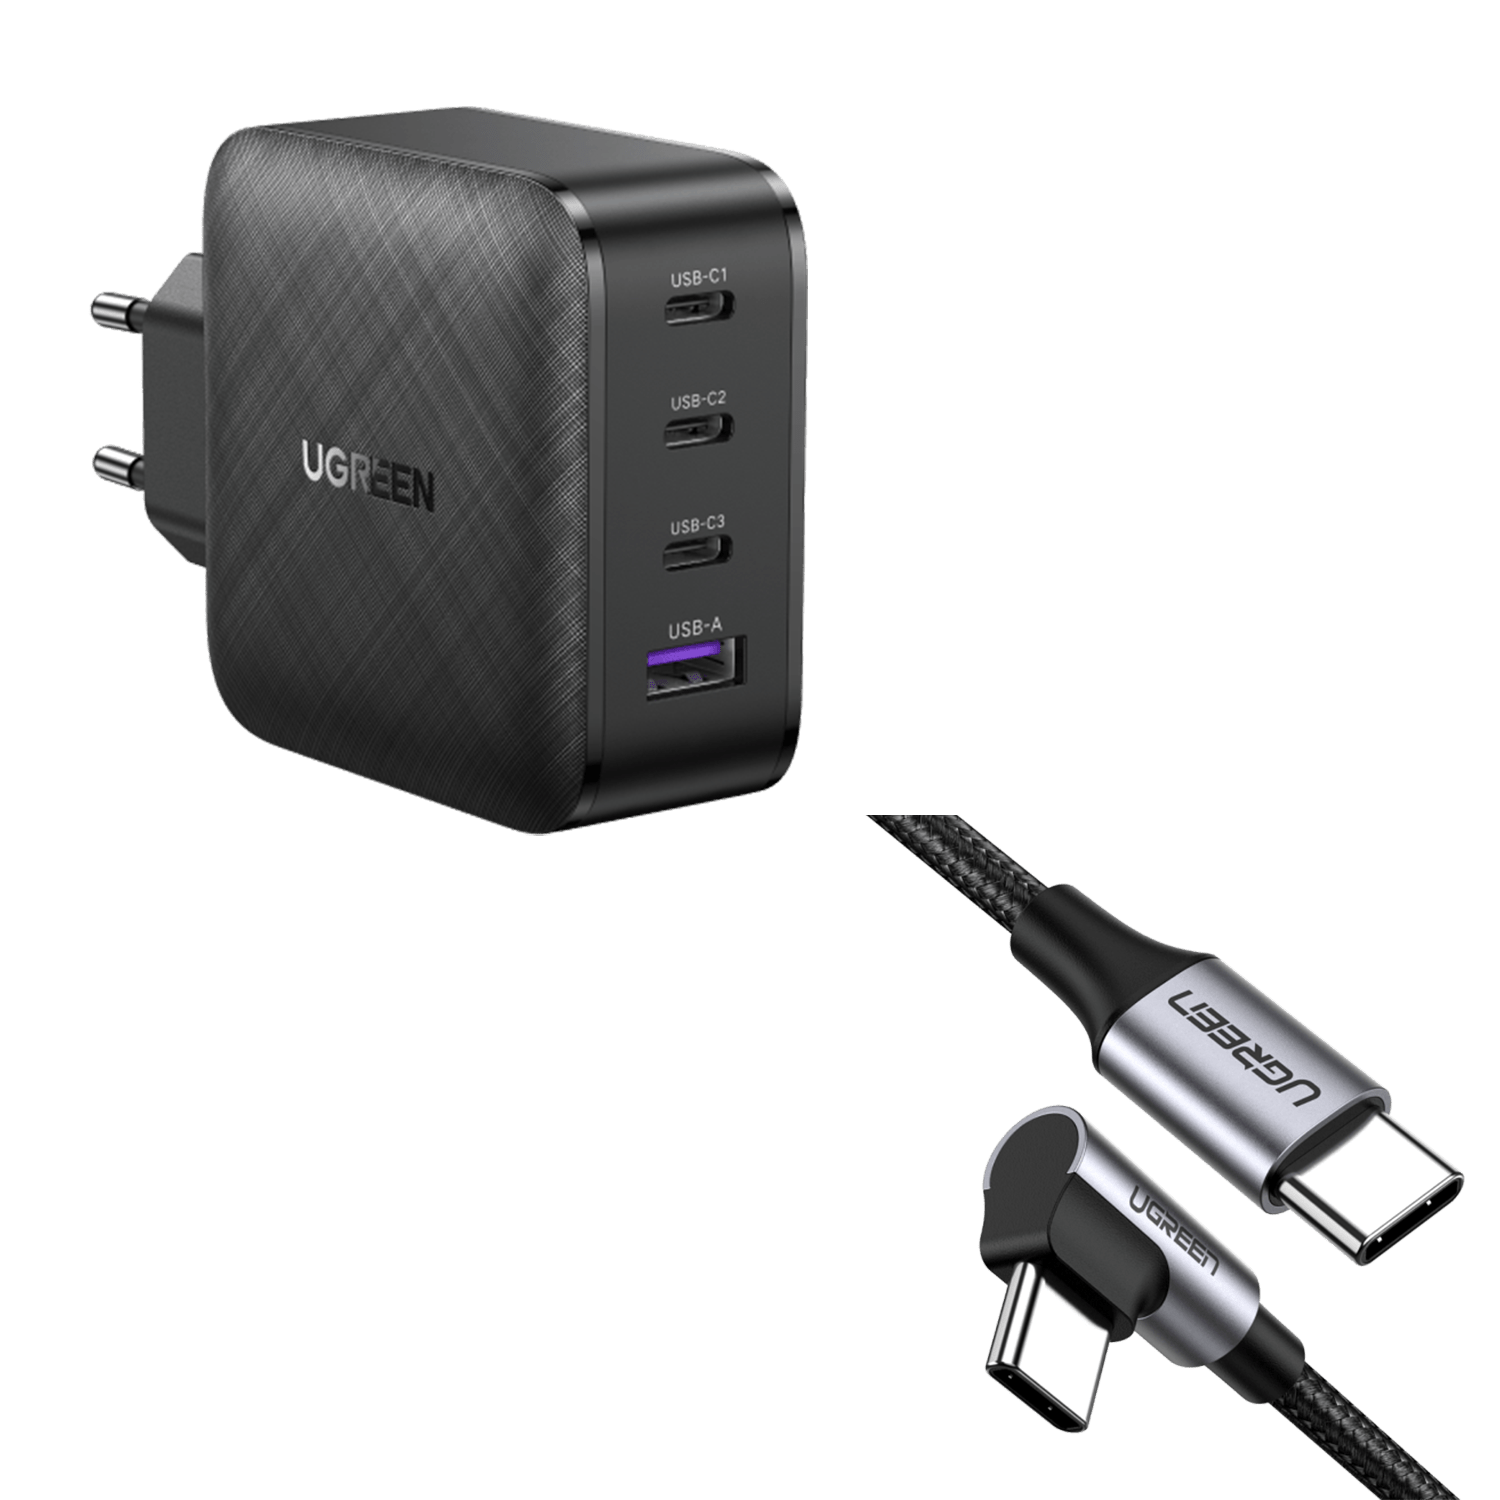 UGREEN 65W Chargeur USB C 4 Ports with Câble USB C